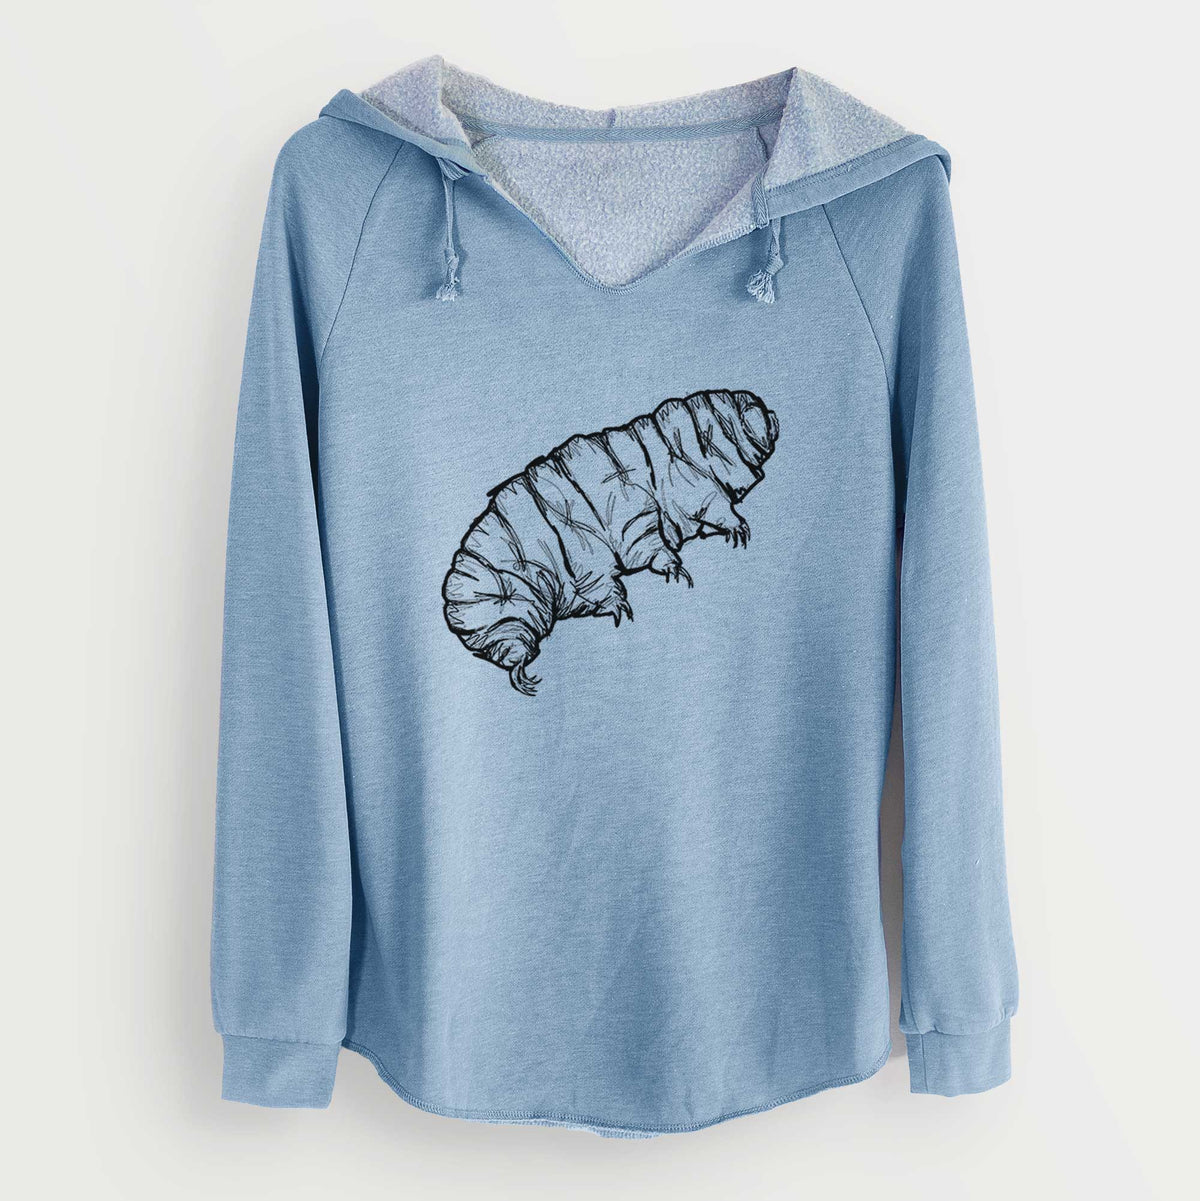 Tardigrade - Tardigrada - Cali Wave Hooded Sweatshirt